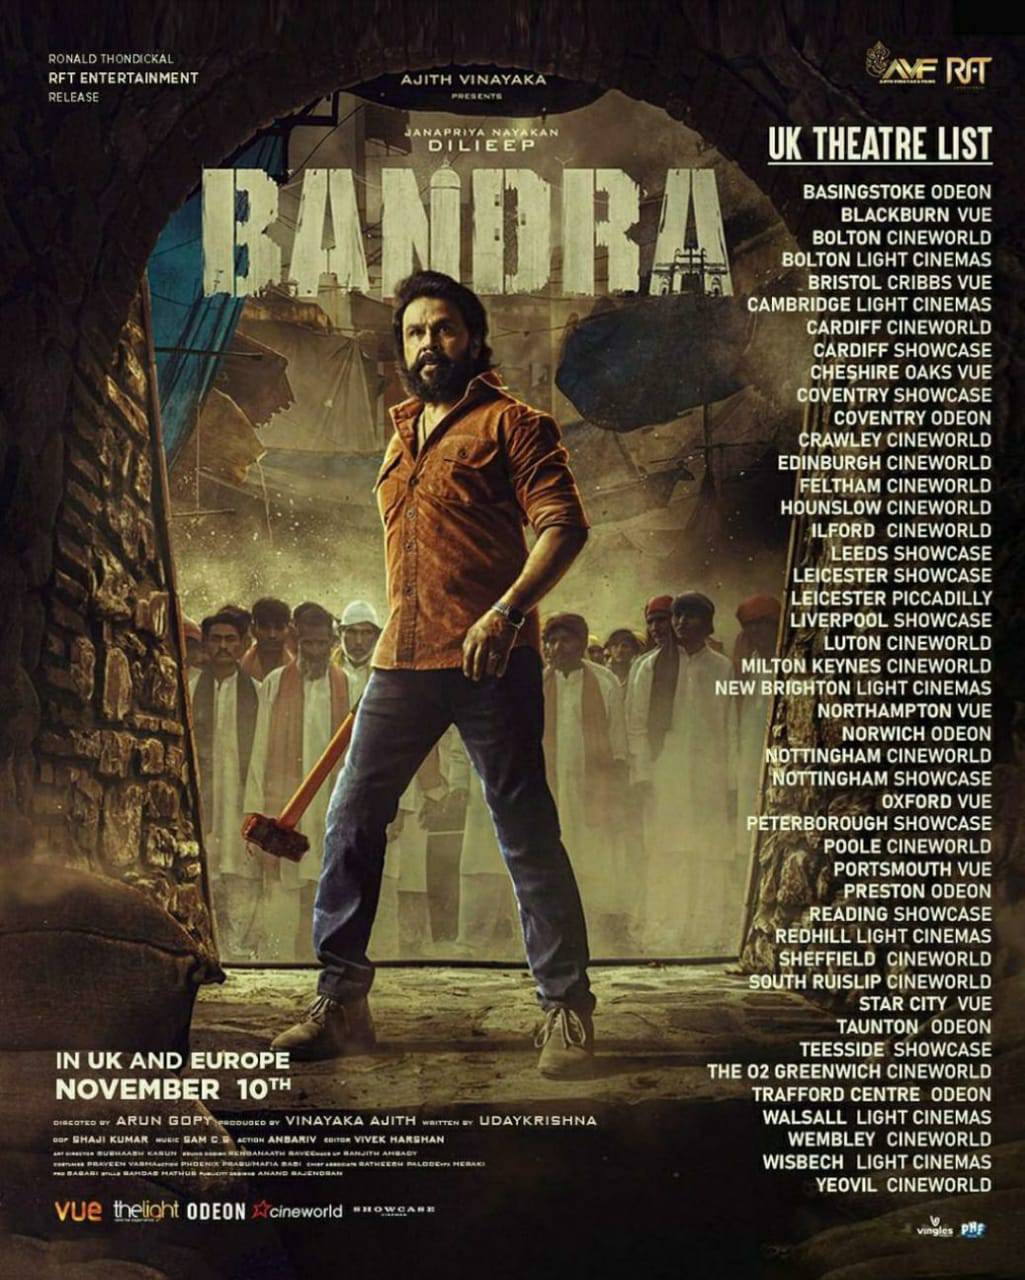 Bandra movie Theatre List